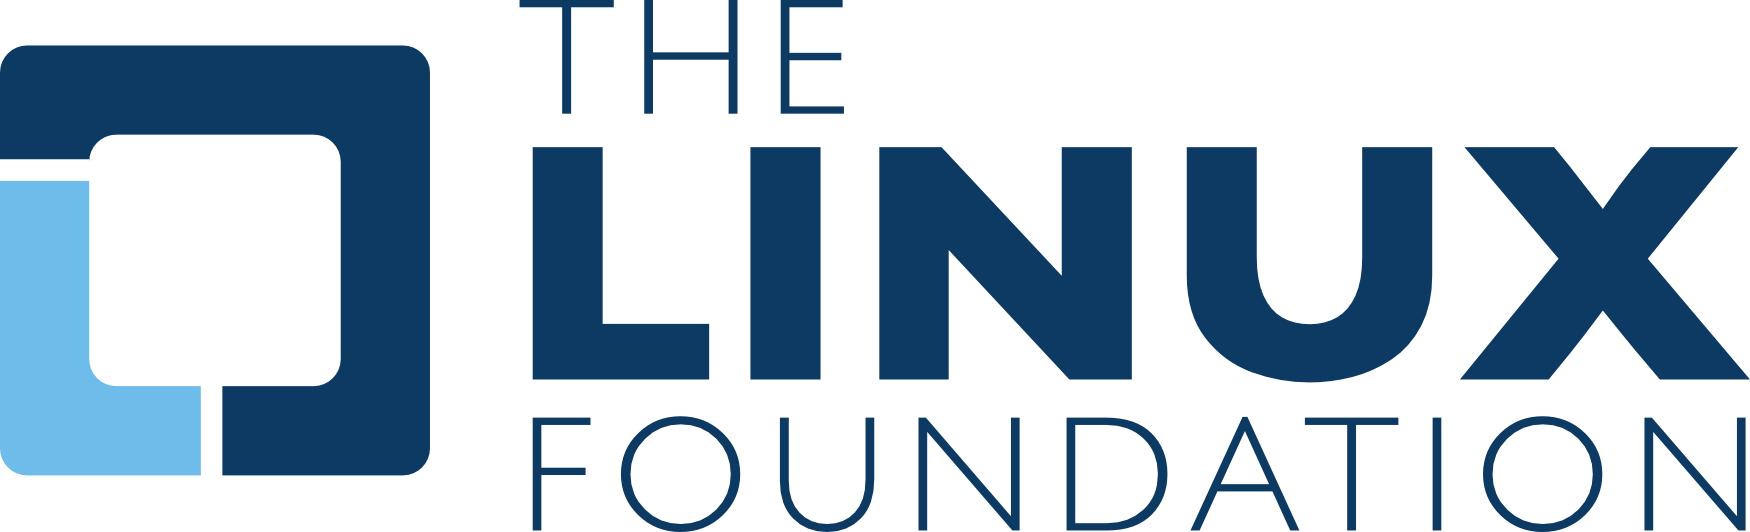 Linux_Foundation_logo